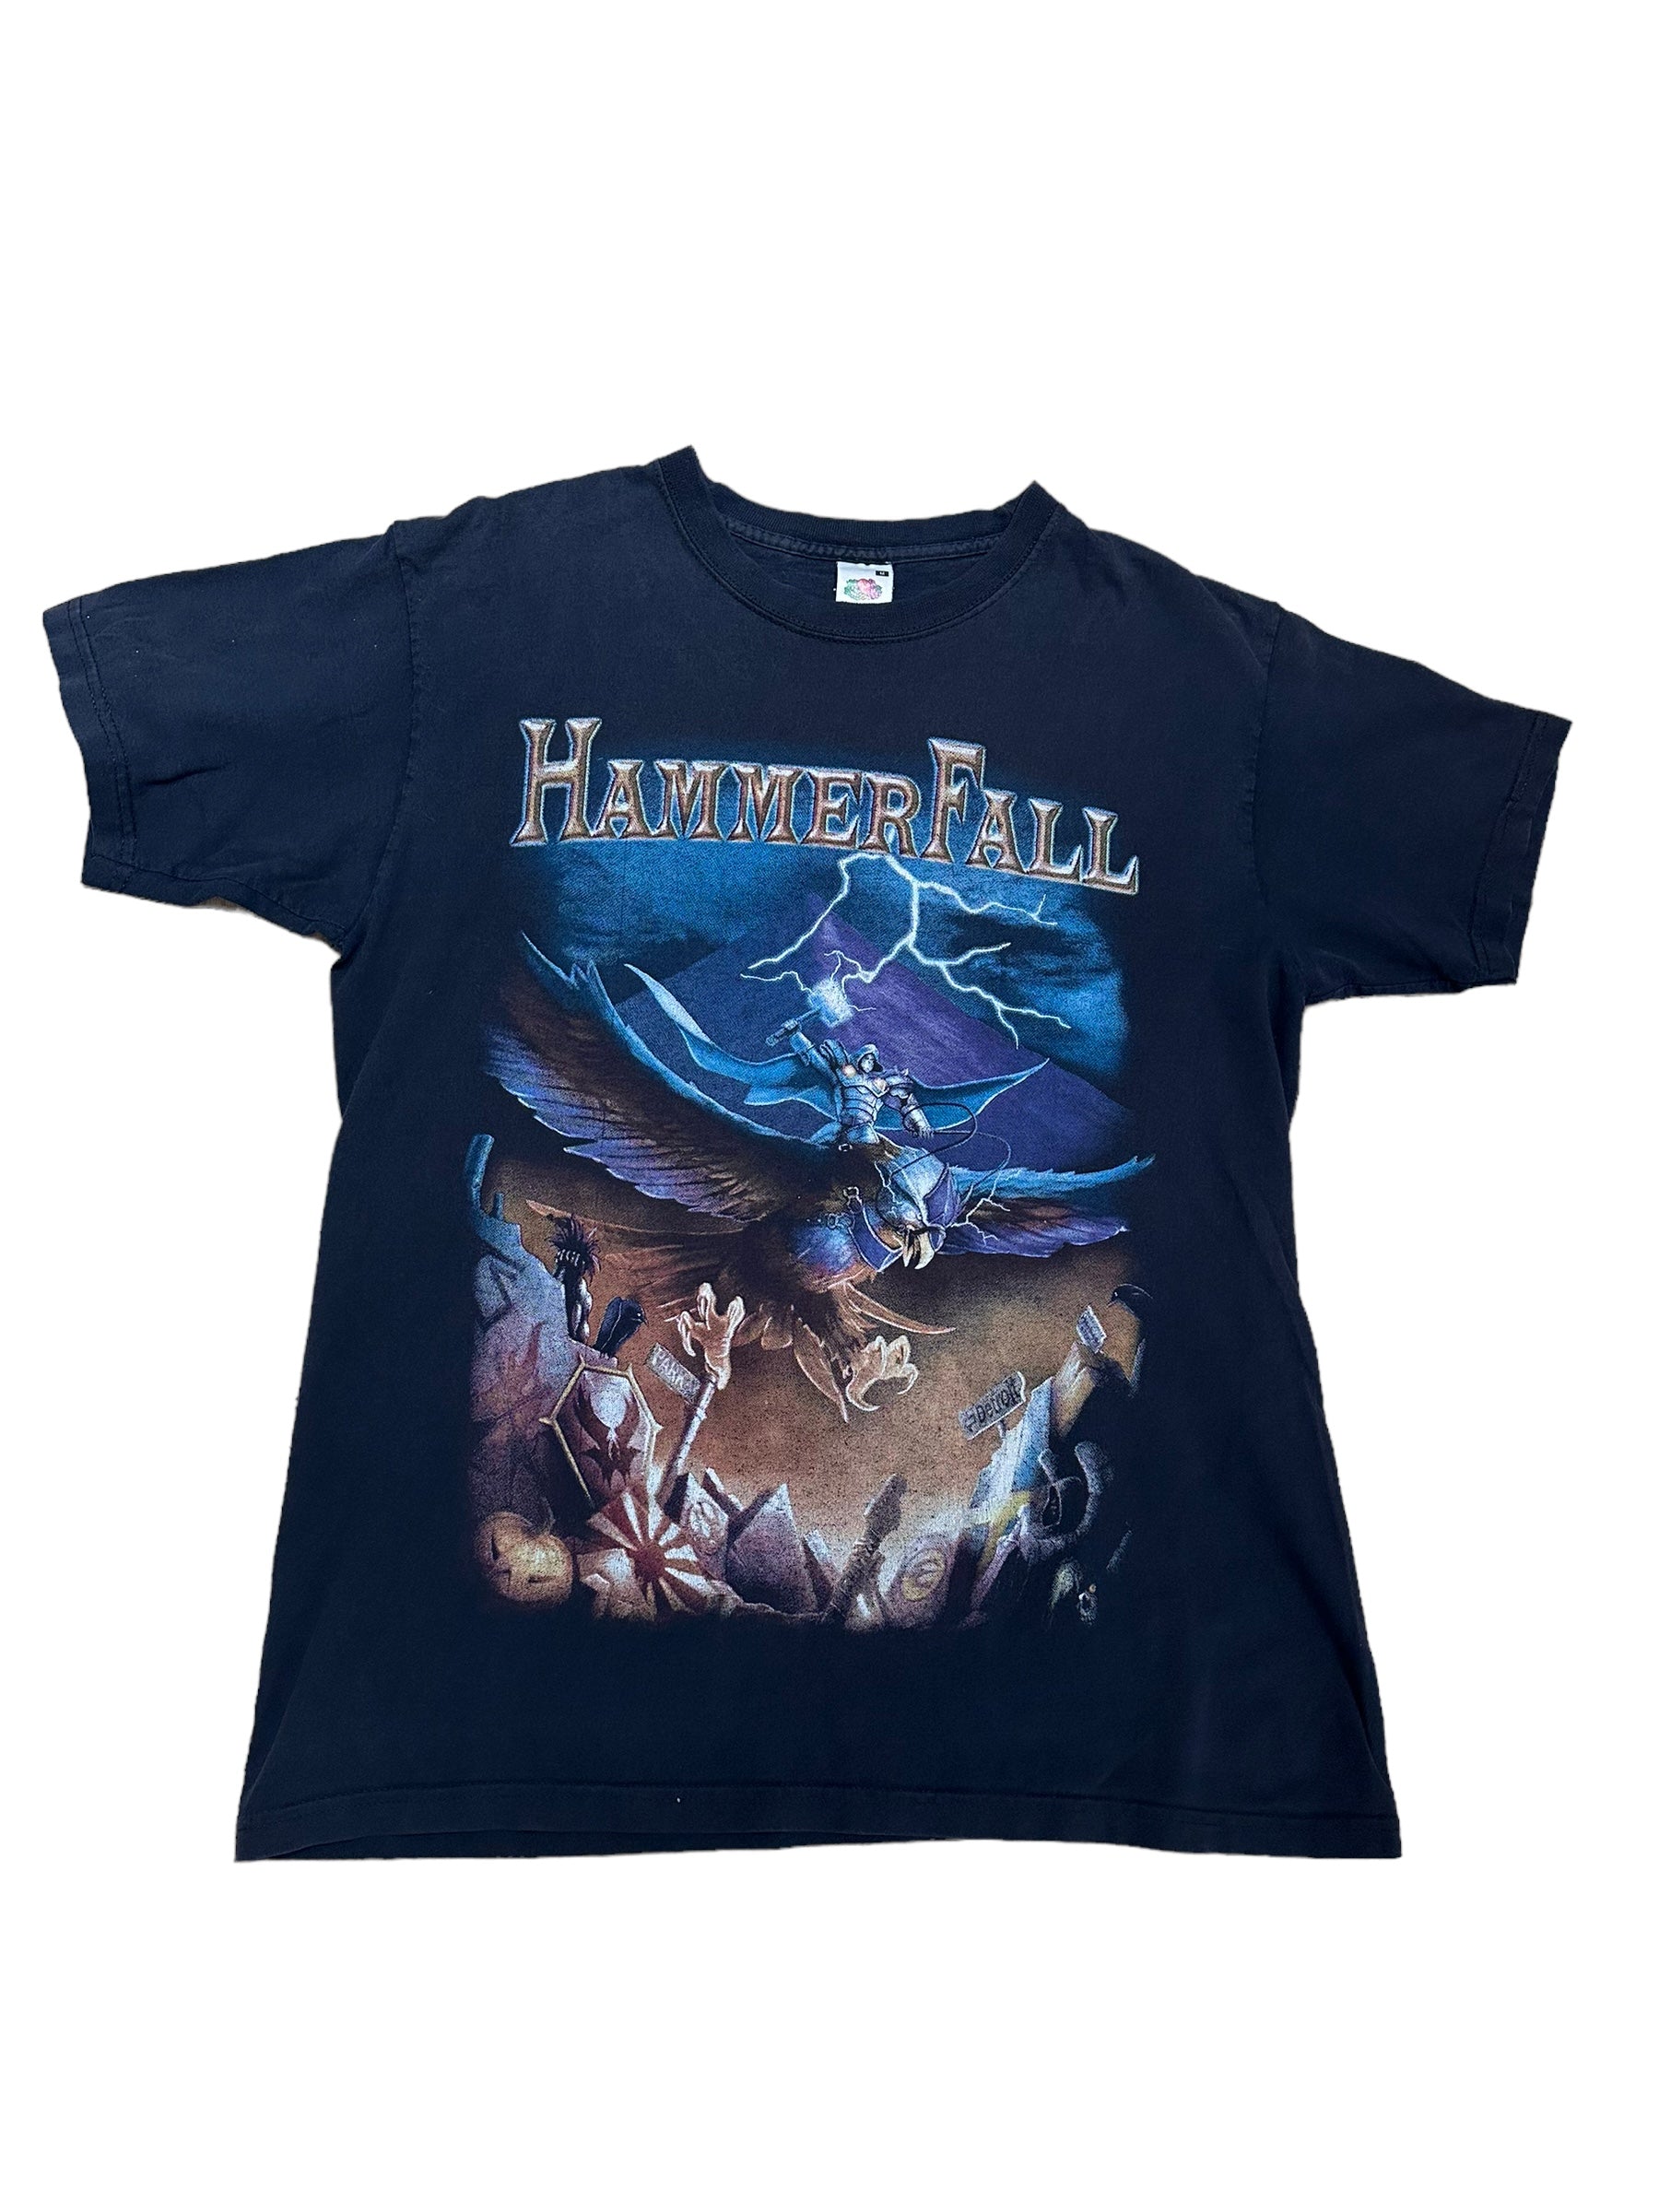 Vintage Hammerfall t-shirt M